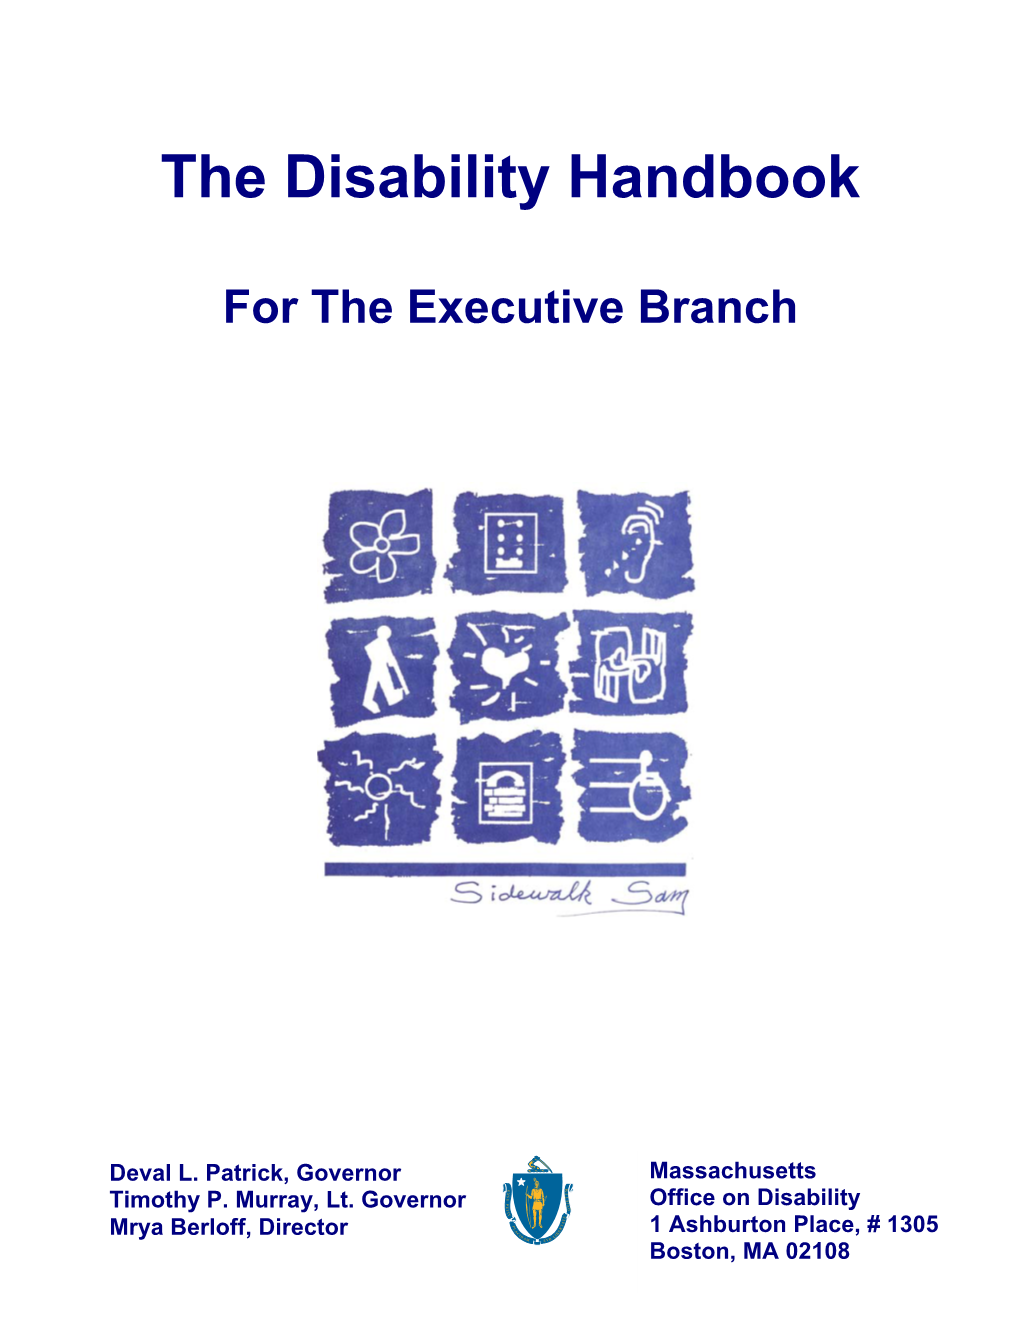 The Disability Handbook for the Executive Branch